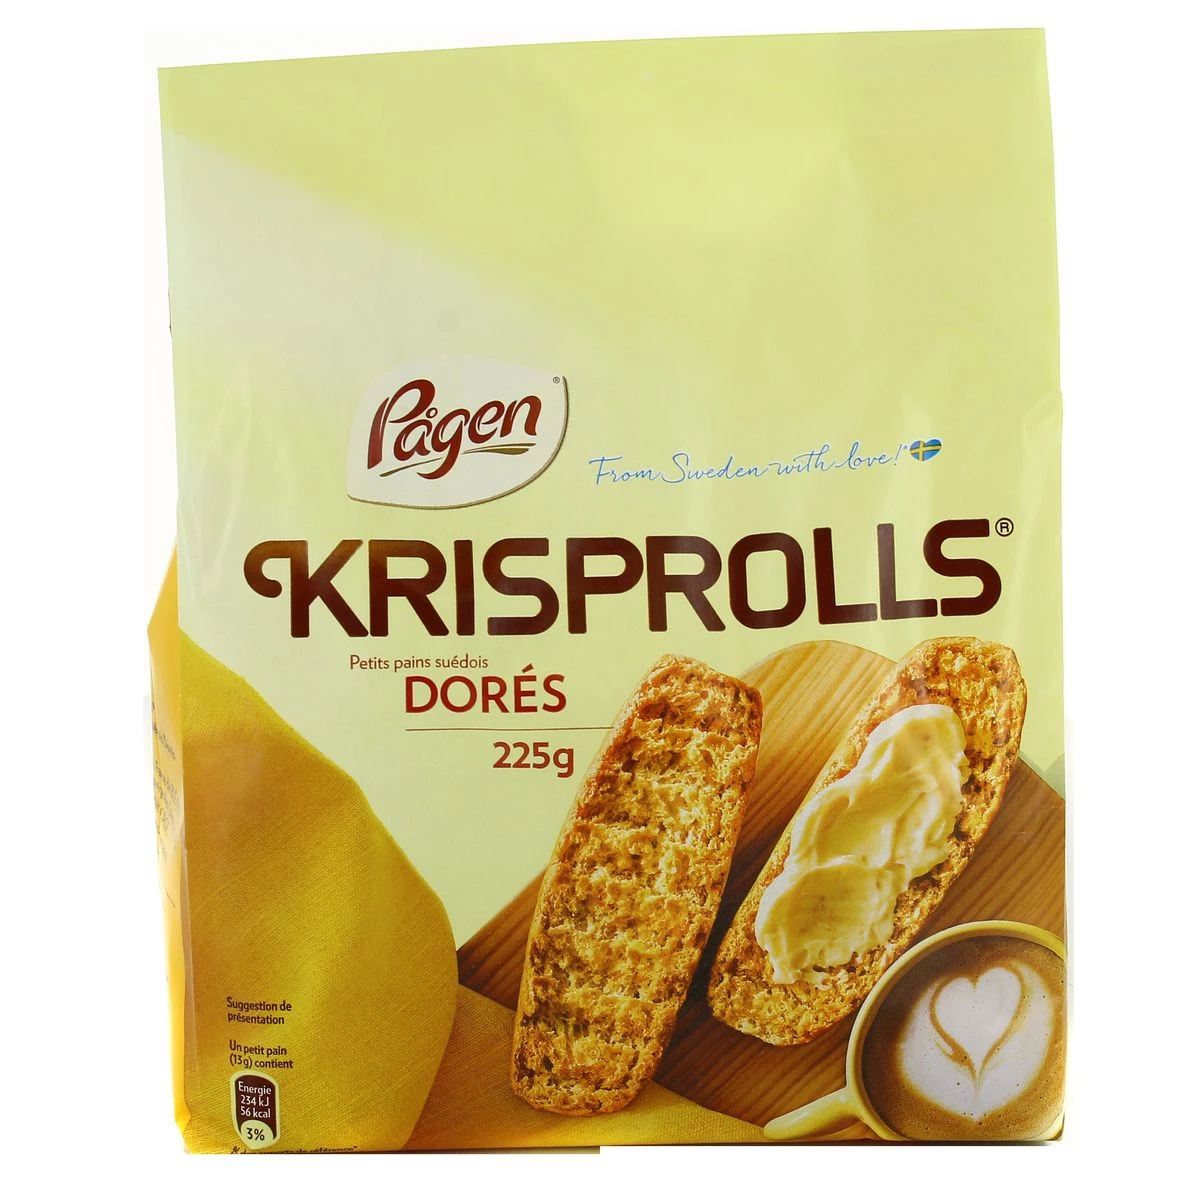 Swedish golden bread rolls 240g - KRISPROLLS